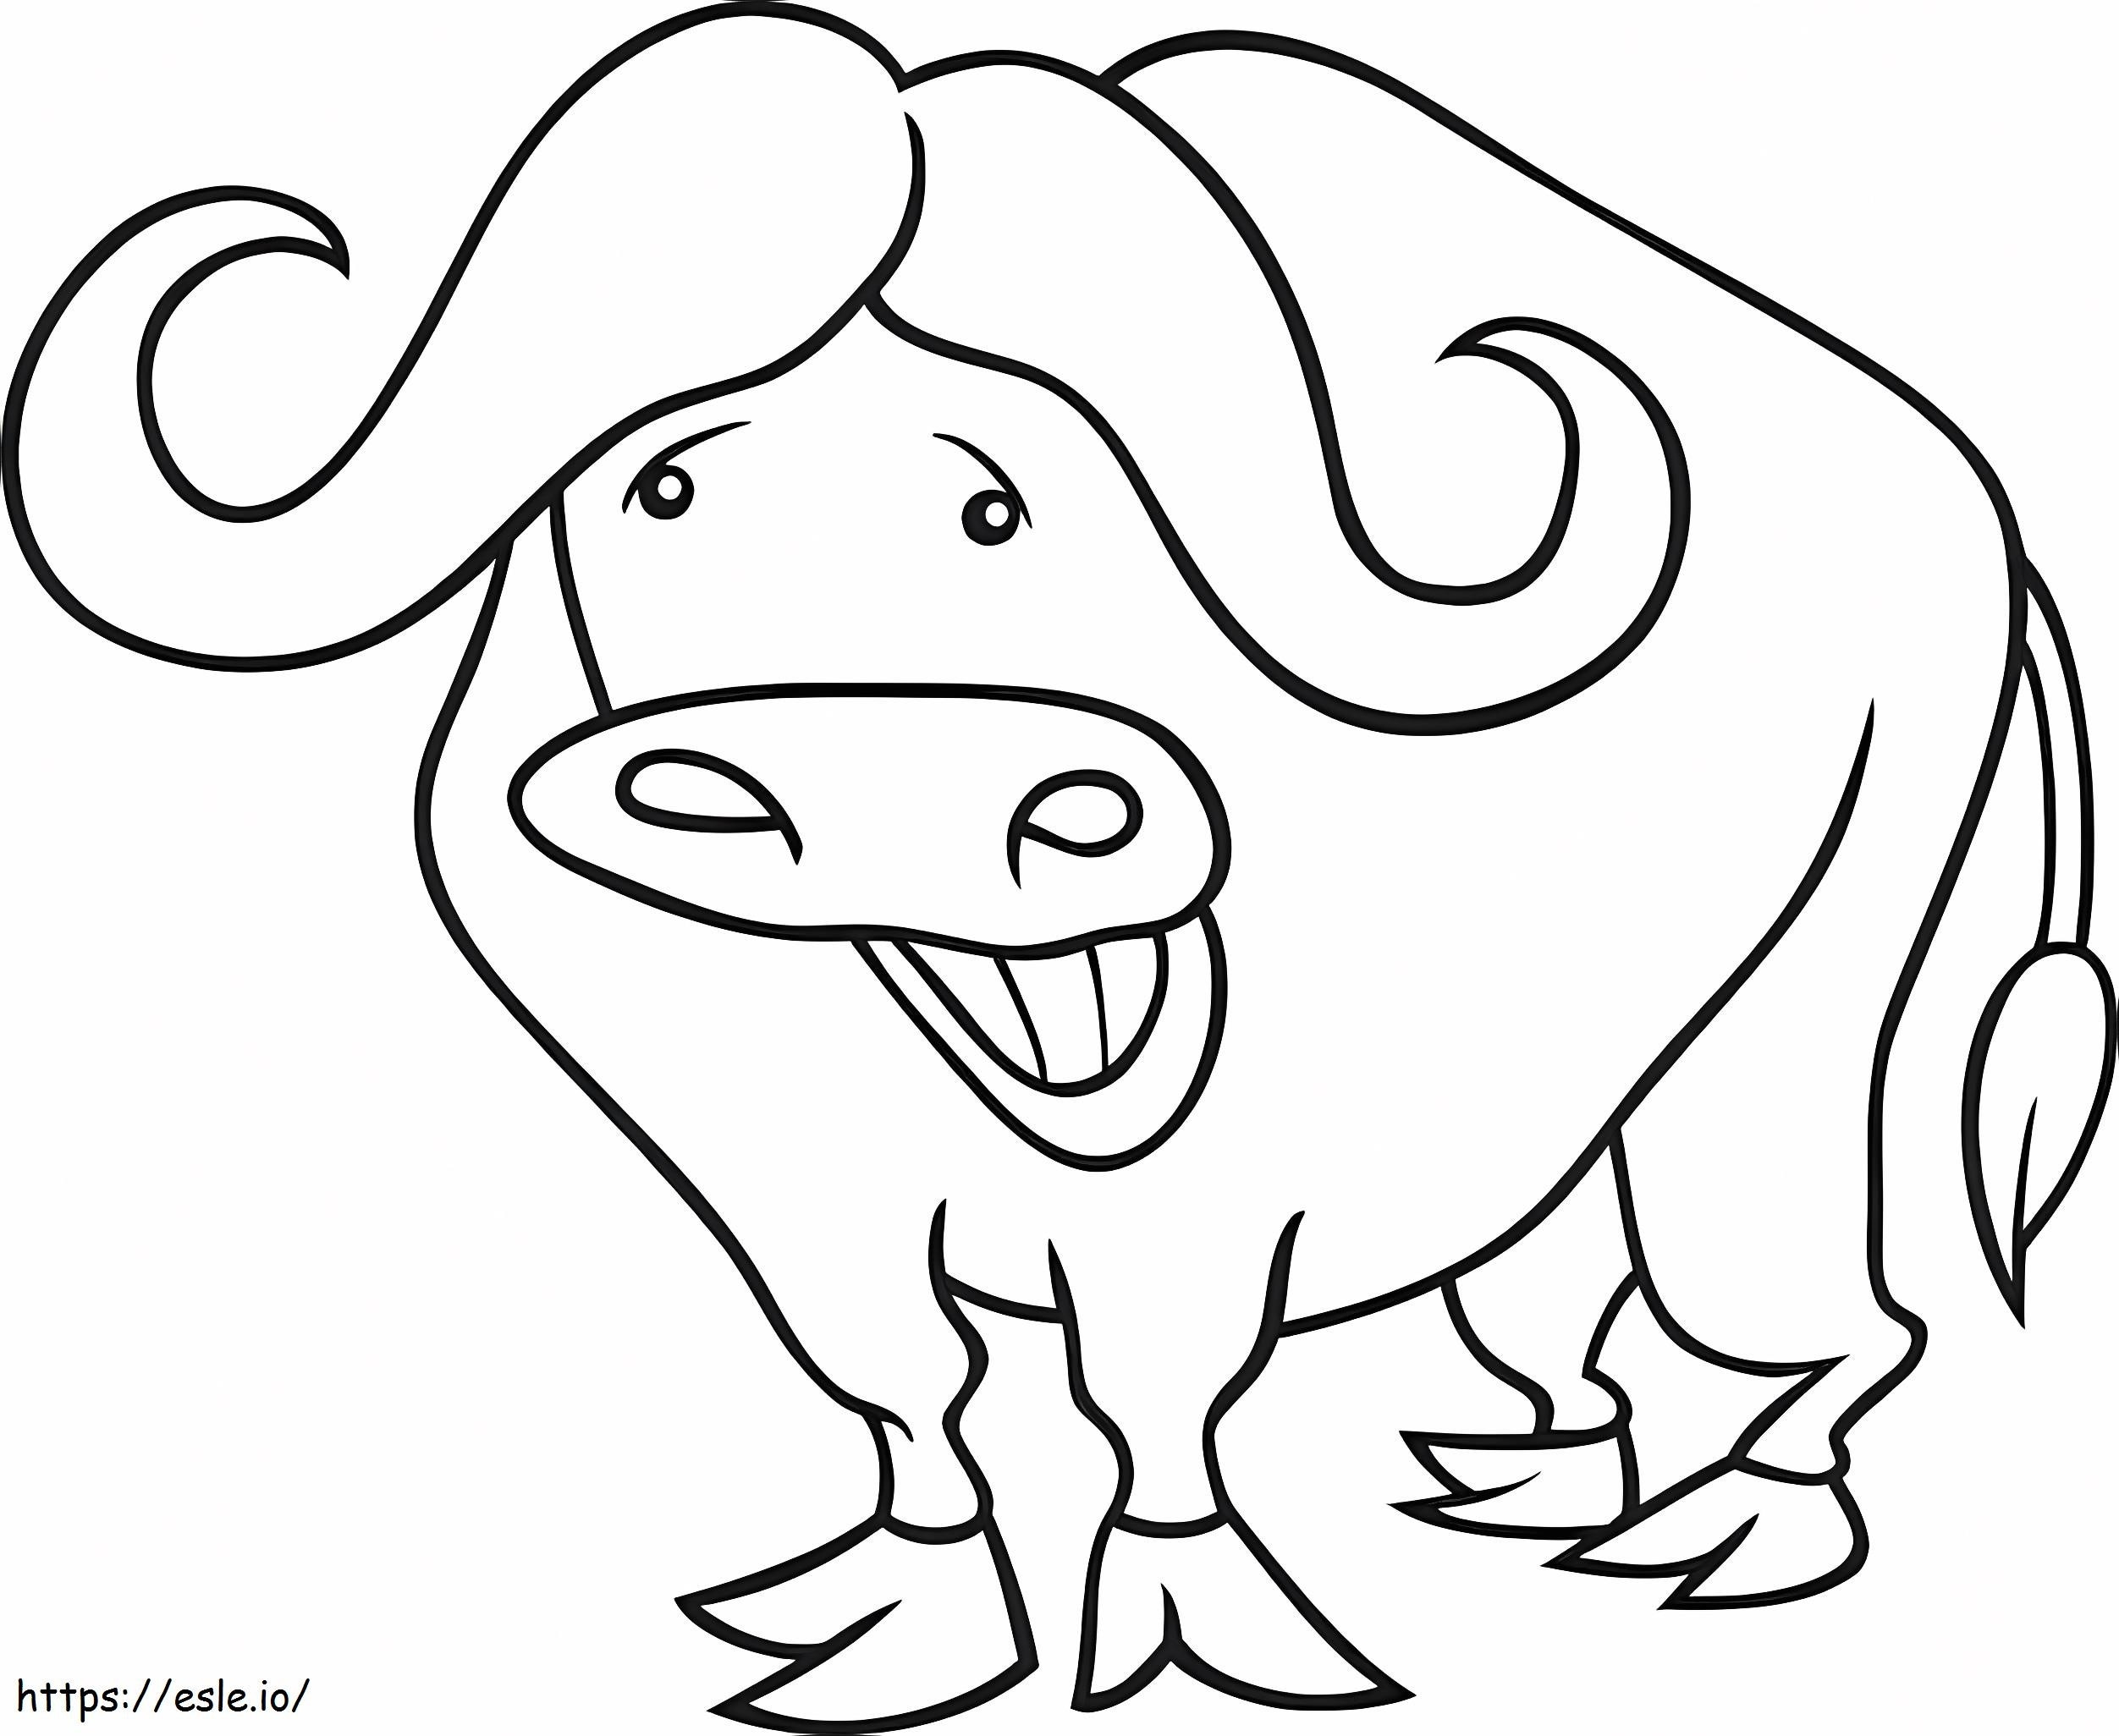 Fun Buffalo coloring page